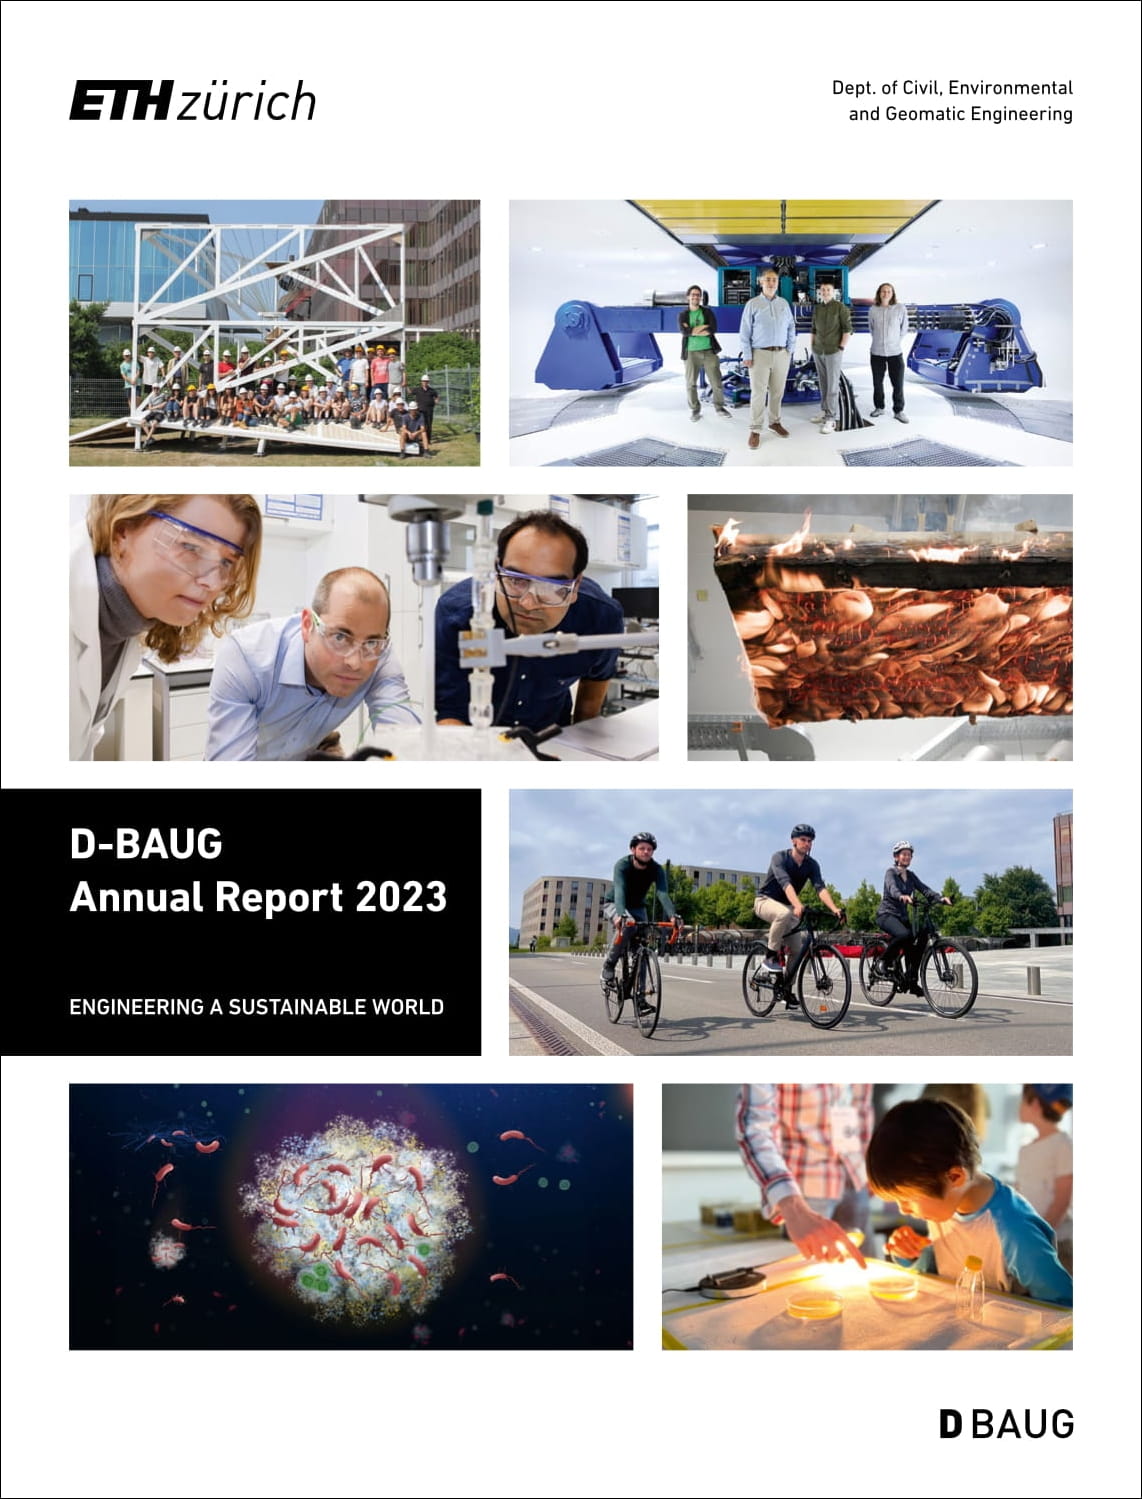 D-BAUG annual report 2023